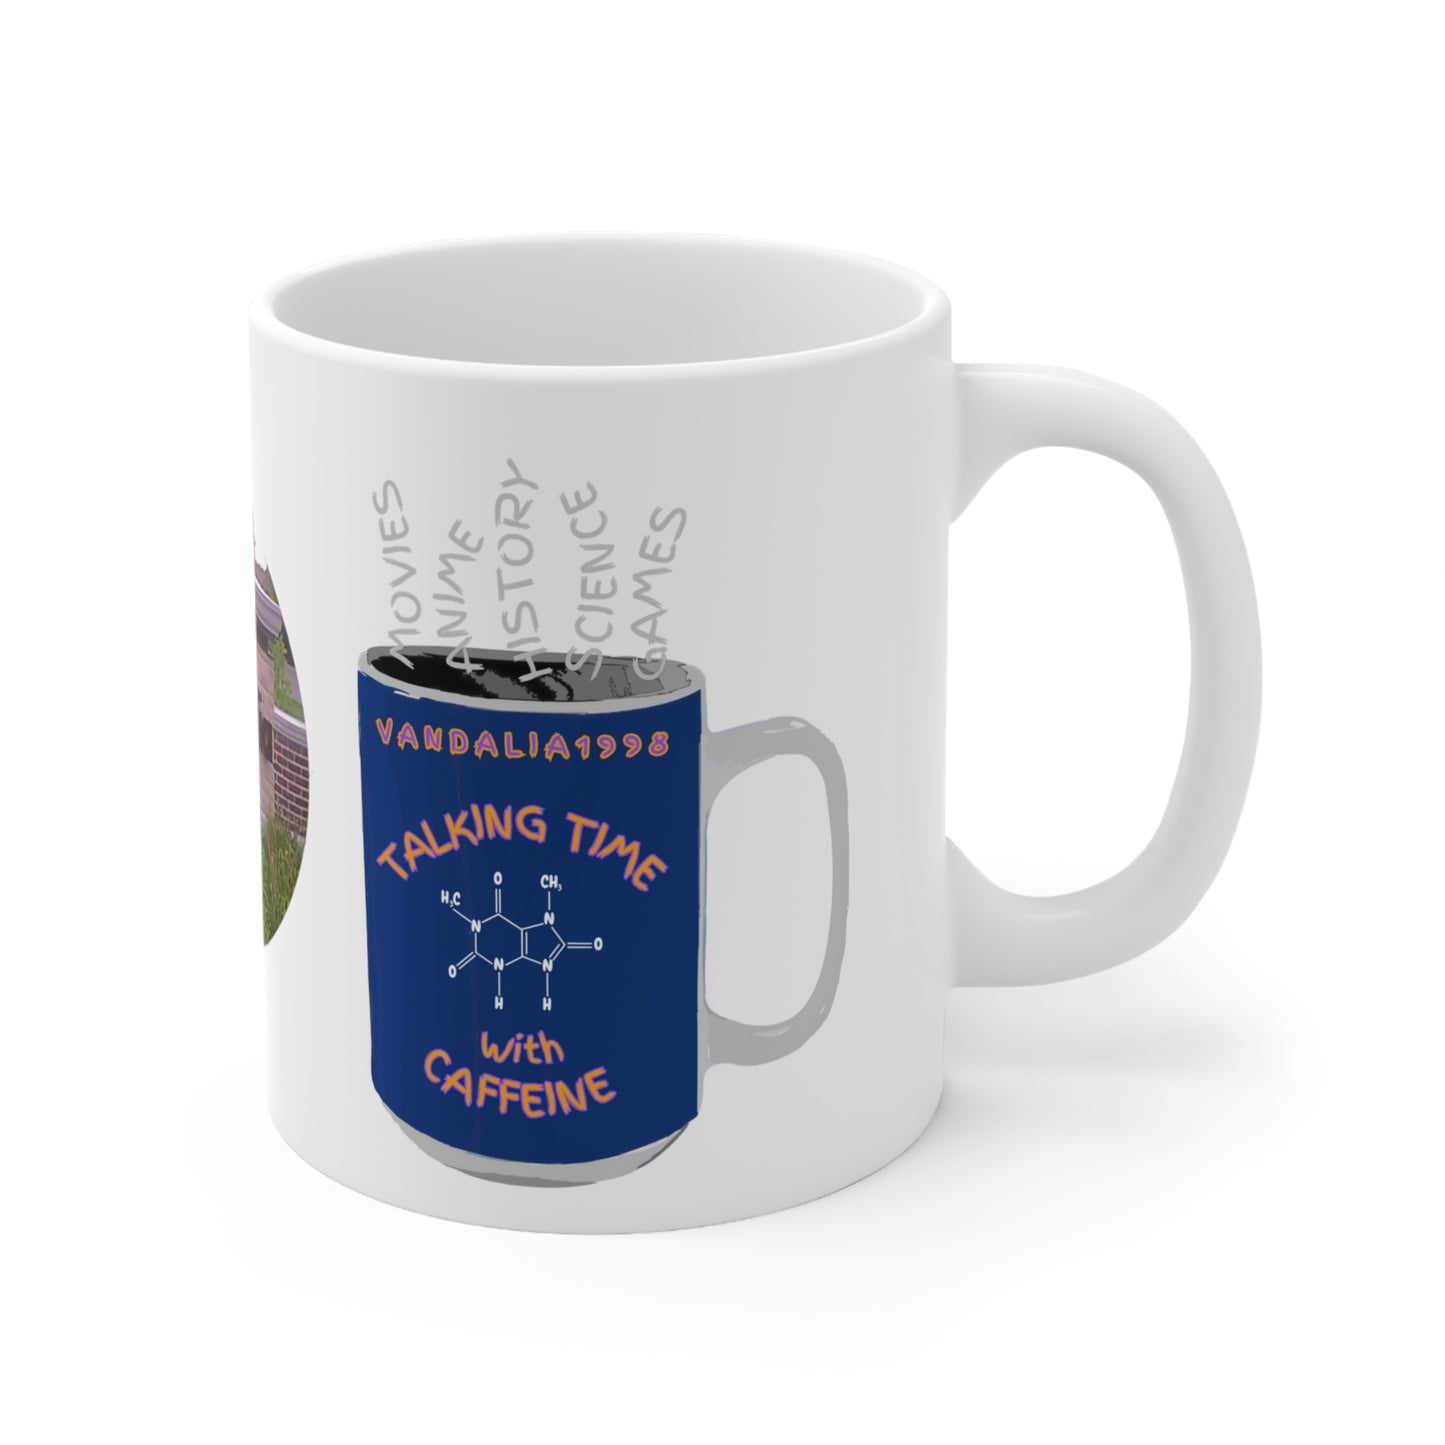 Talking Time With Caffeine Ceramic Mug 11oz